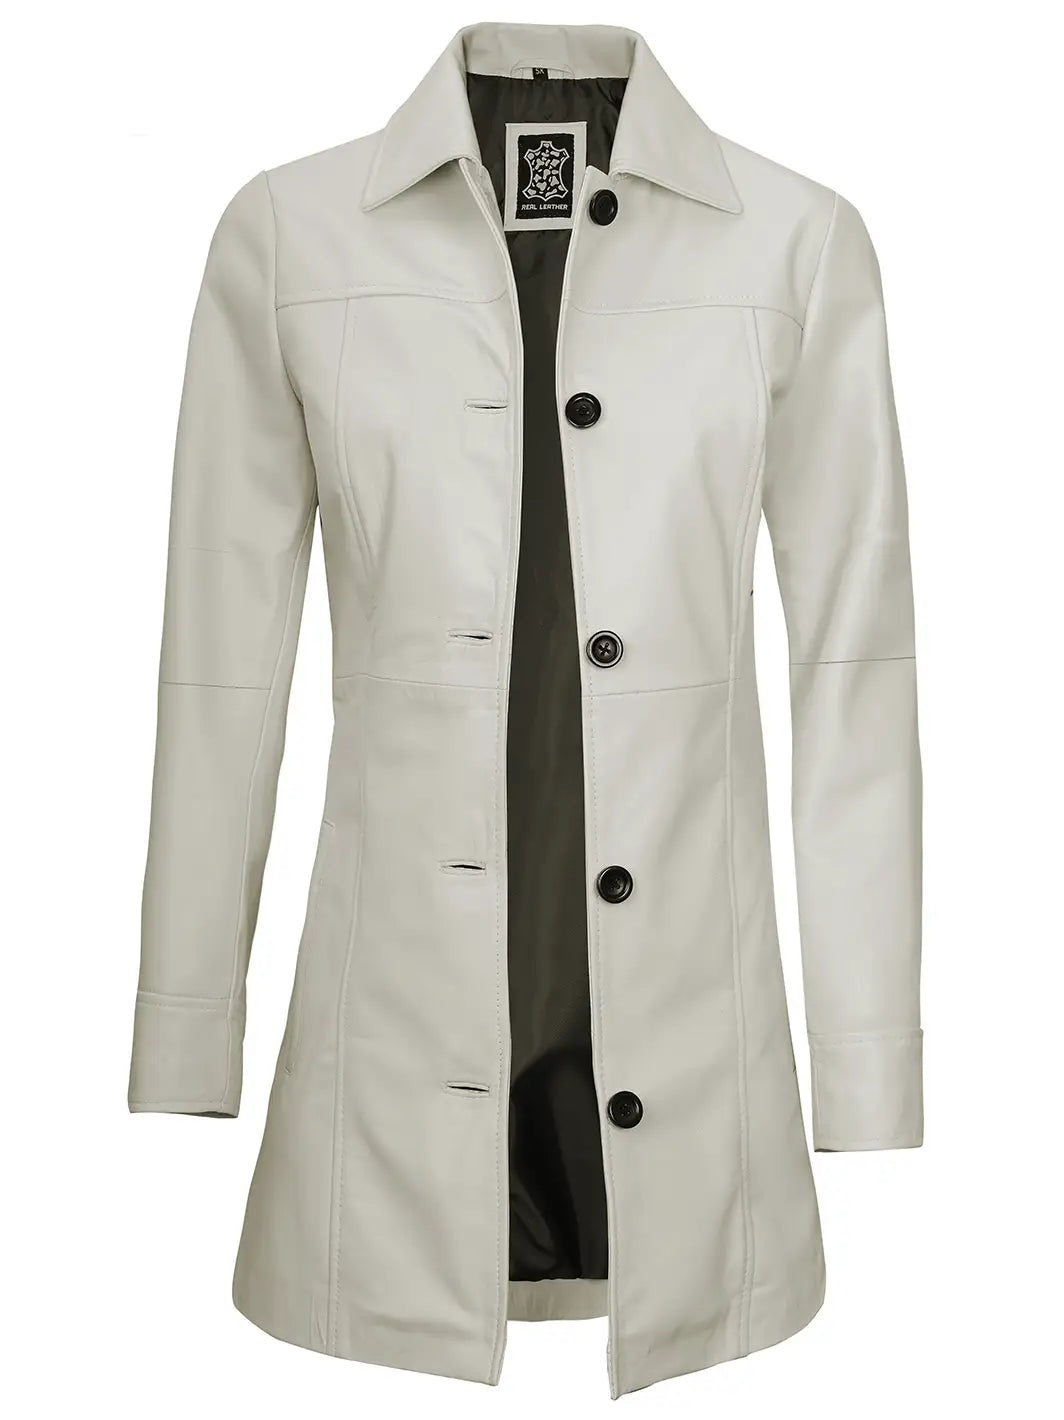 Off white leather coat